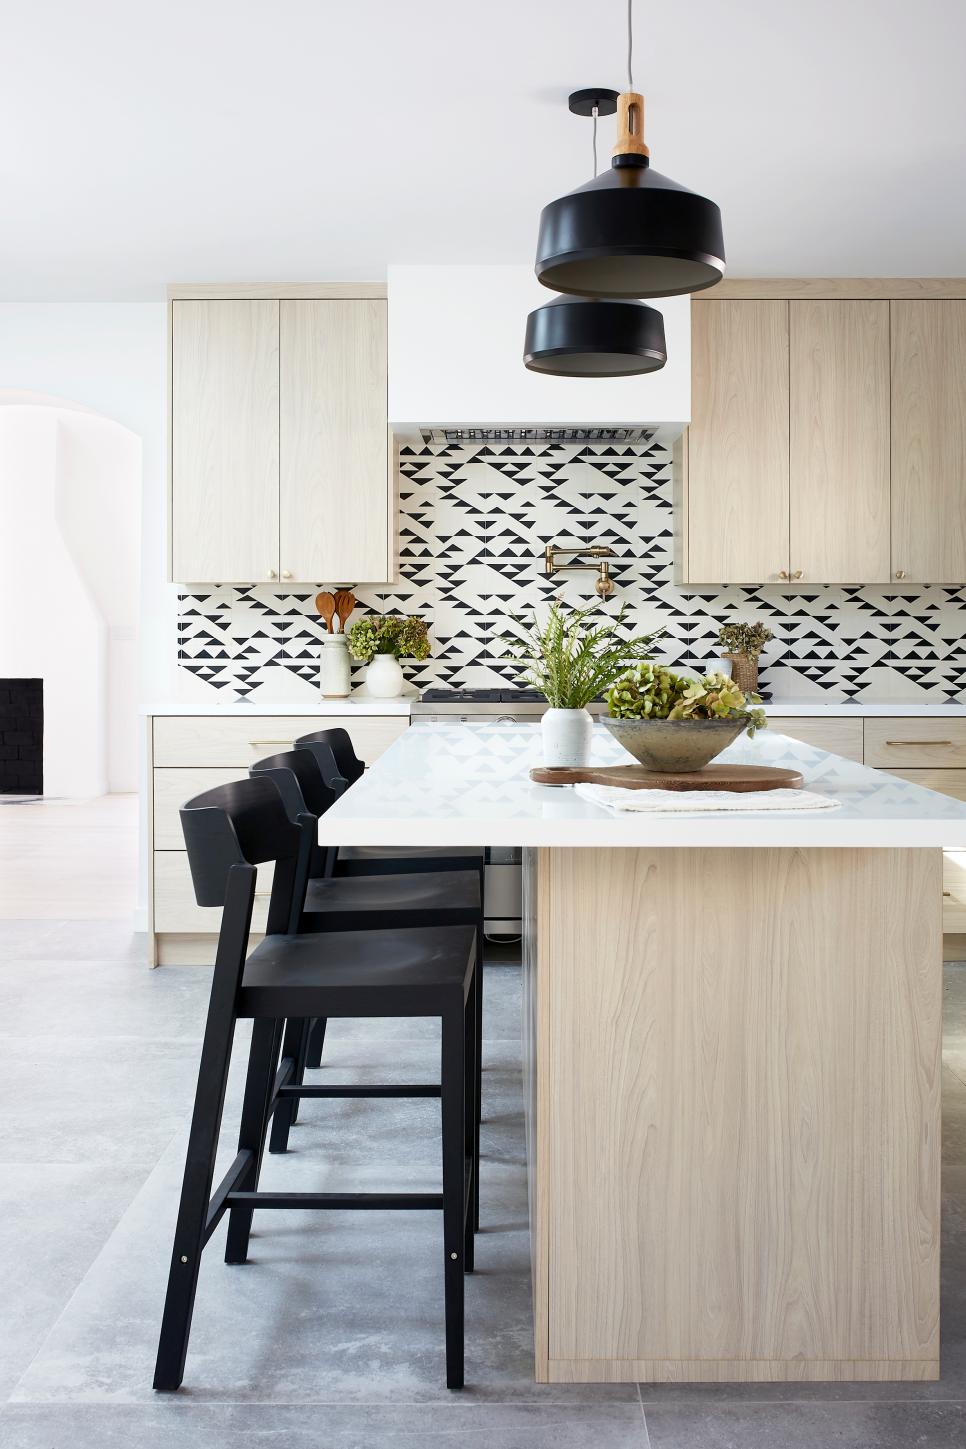 Contemporary Kitchen with Black and White Tile Backsplash | HGTV